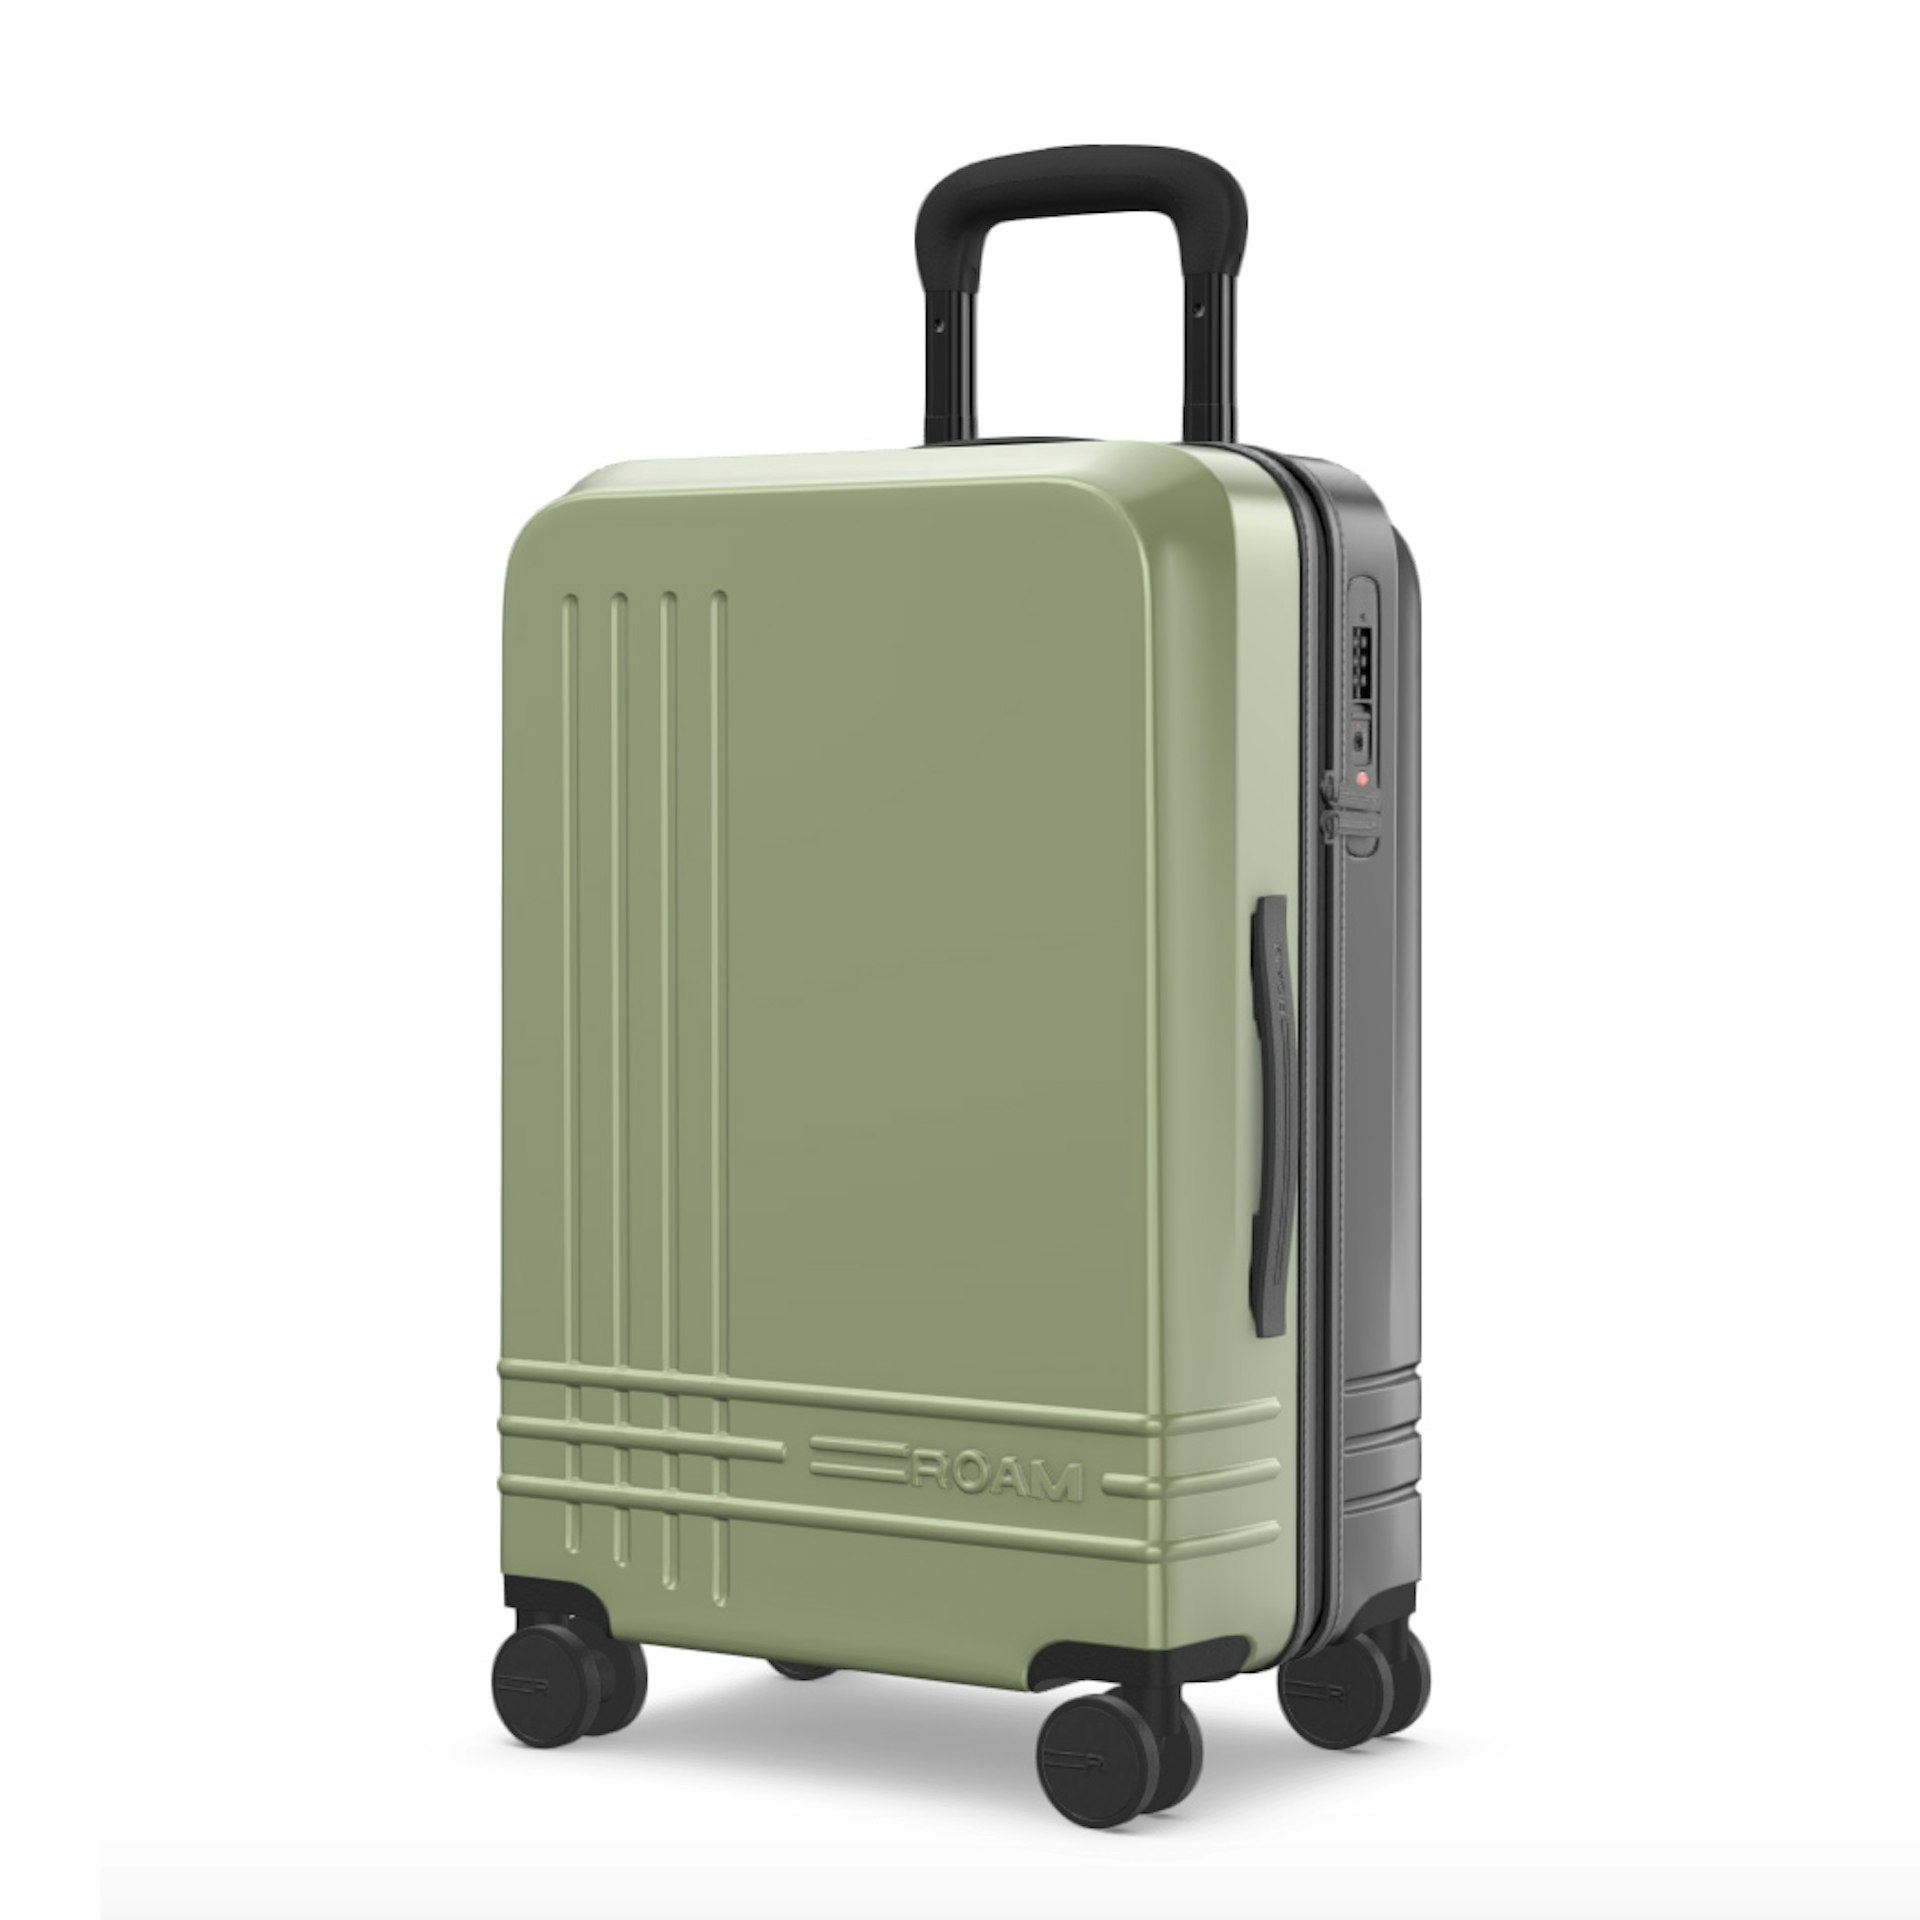 ROAM's Marais suitcase in pale green